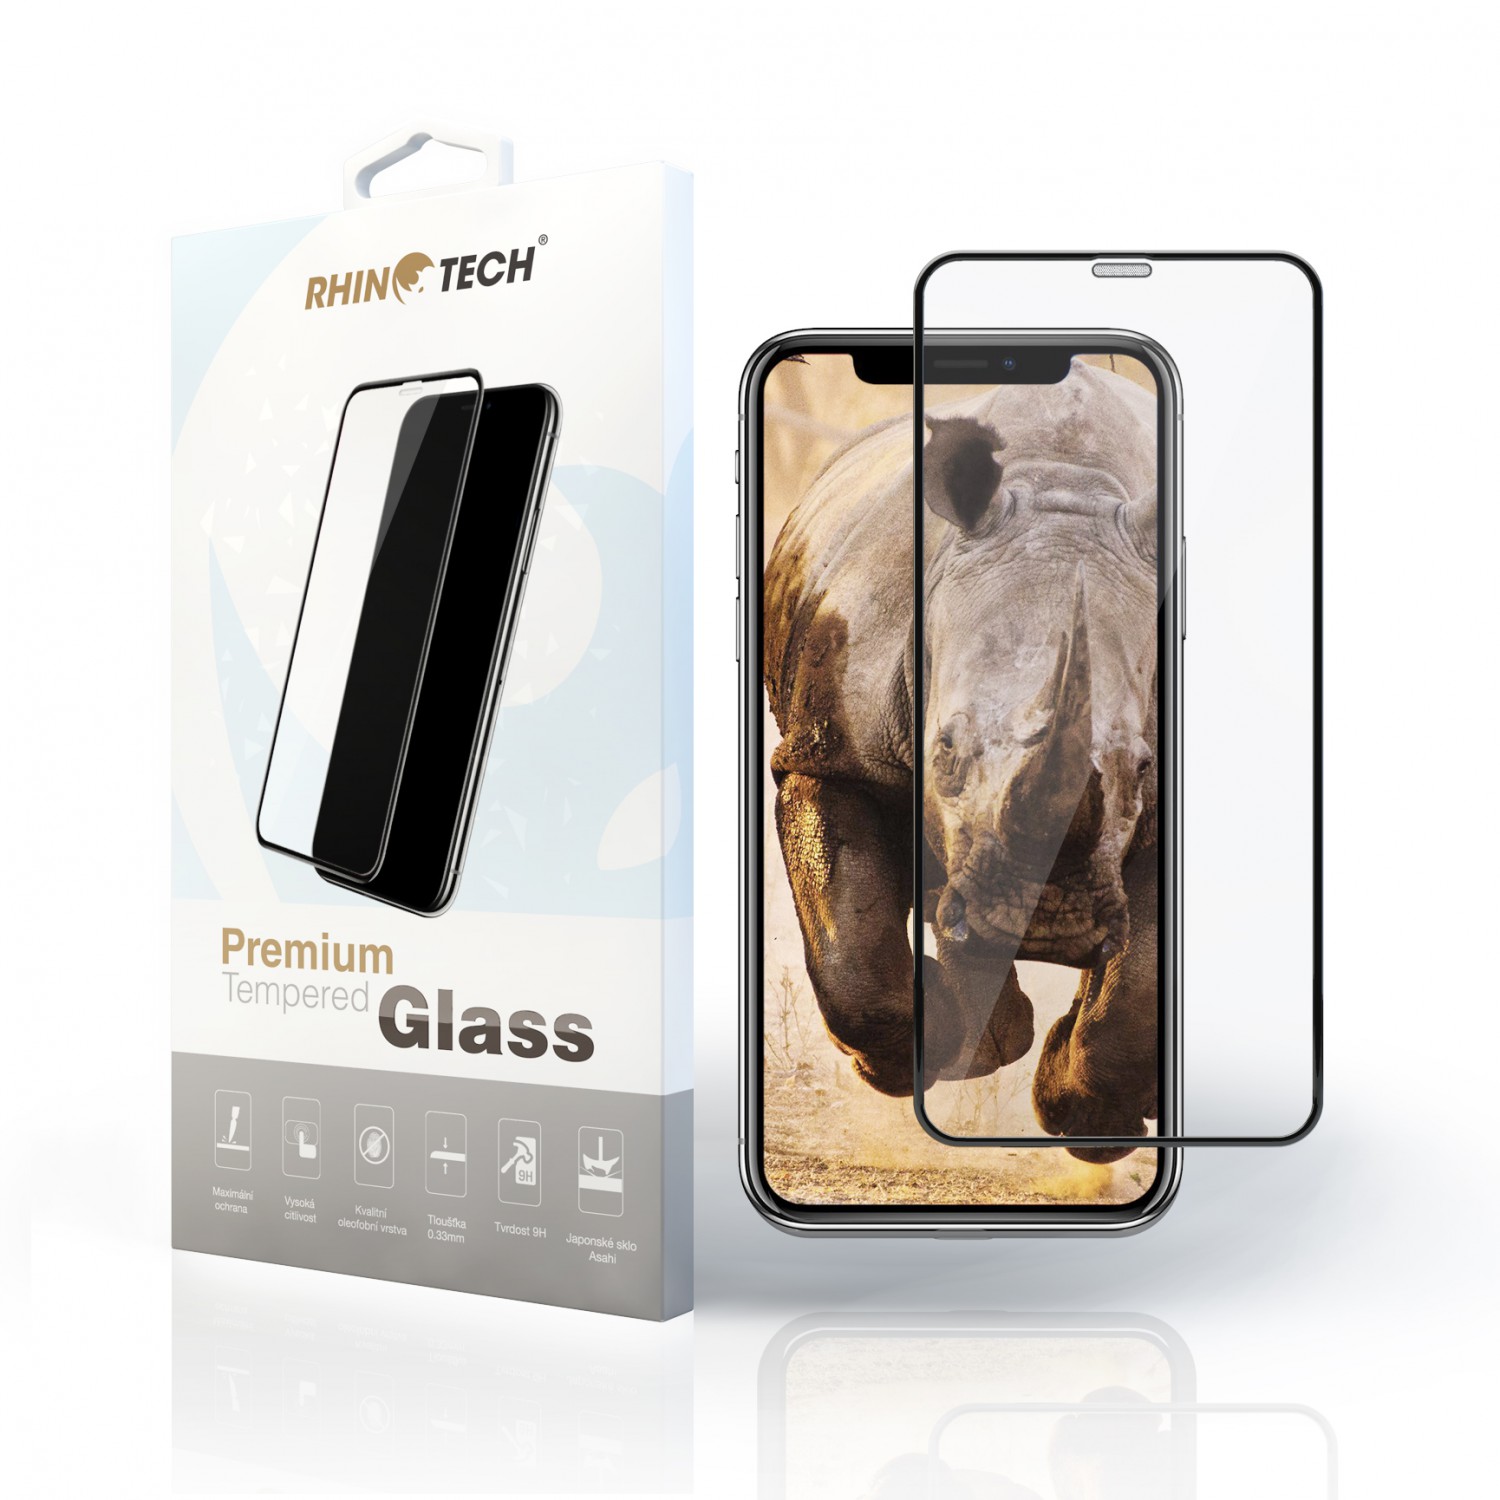 RhinoTech 2 Tvrzené ochranné 2.5D sklo pro Xiaomi Pocophone F1 bílá